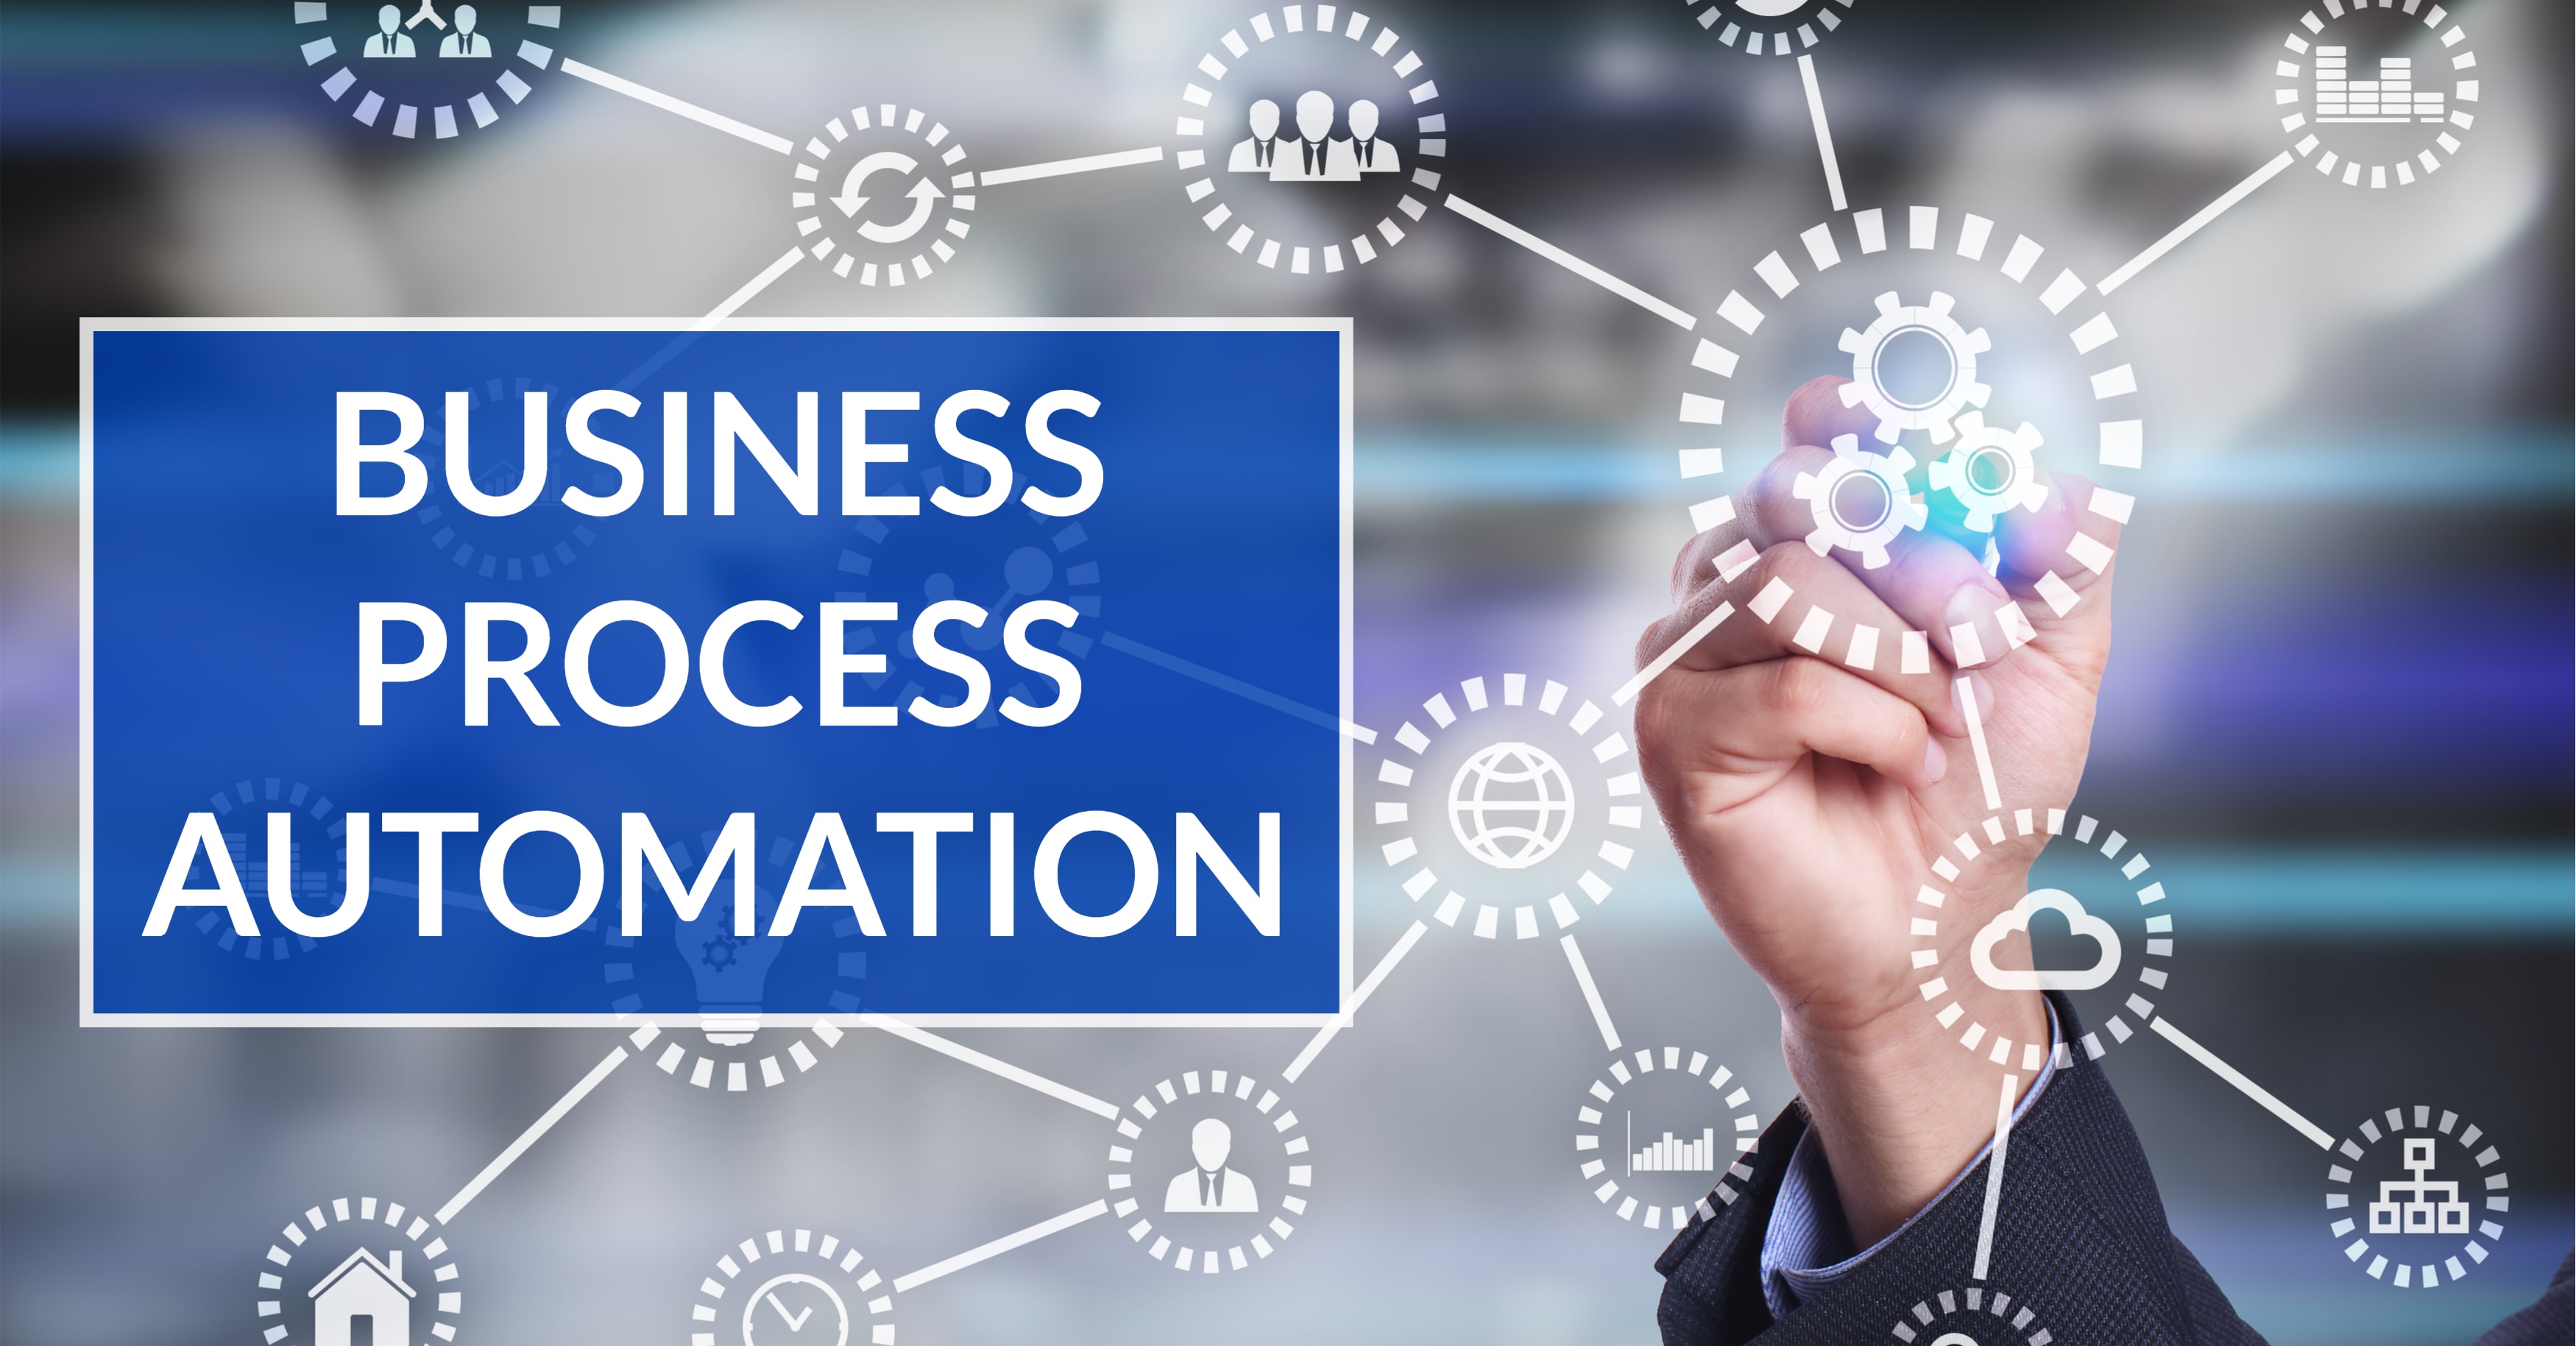 business processes automation